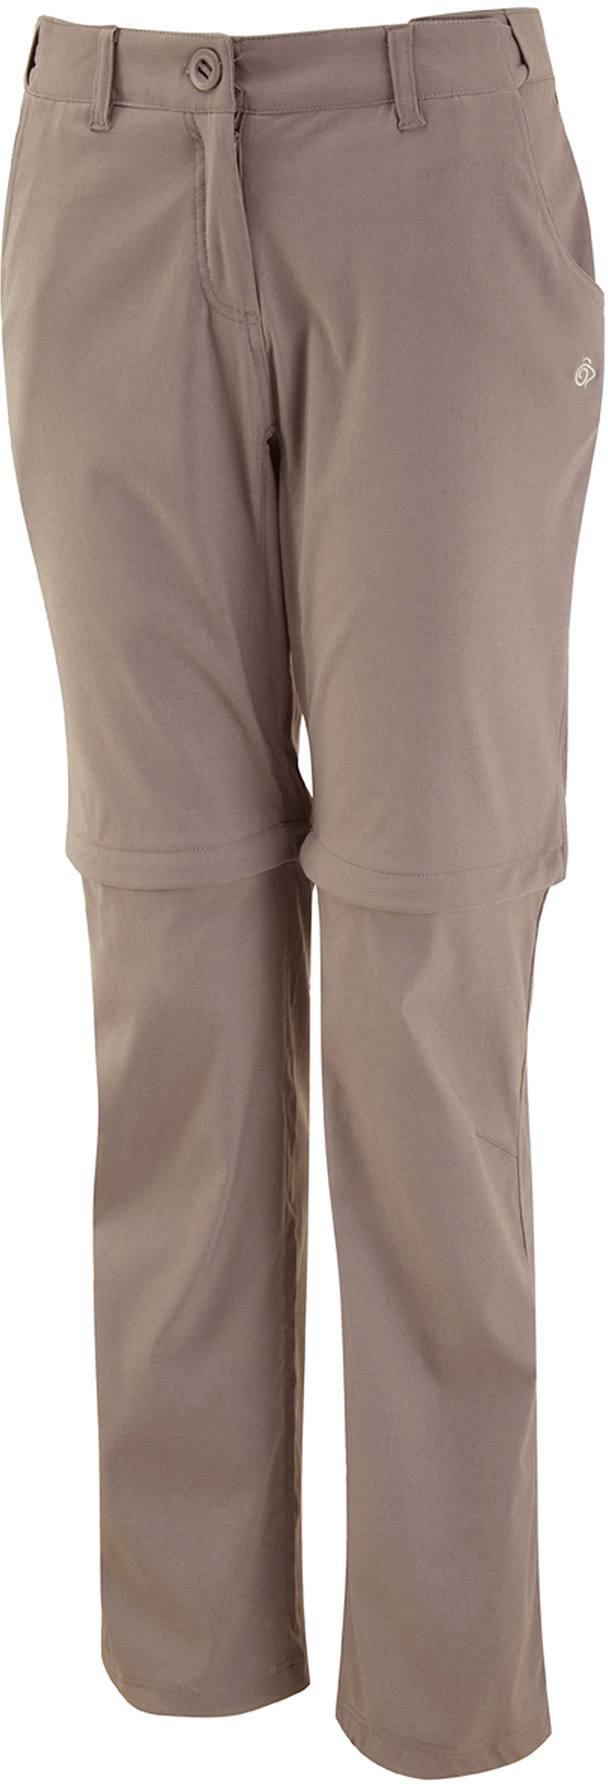 Nosilife Pro Convertible Trousers Women 2015 Sand 8